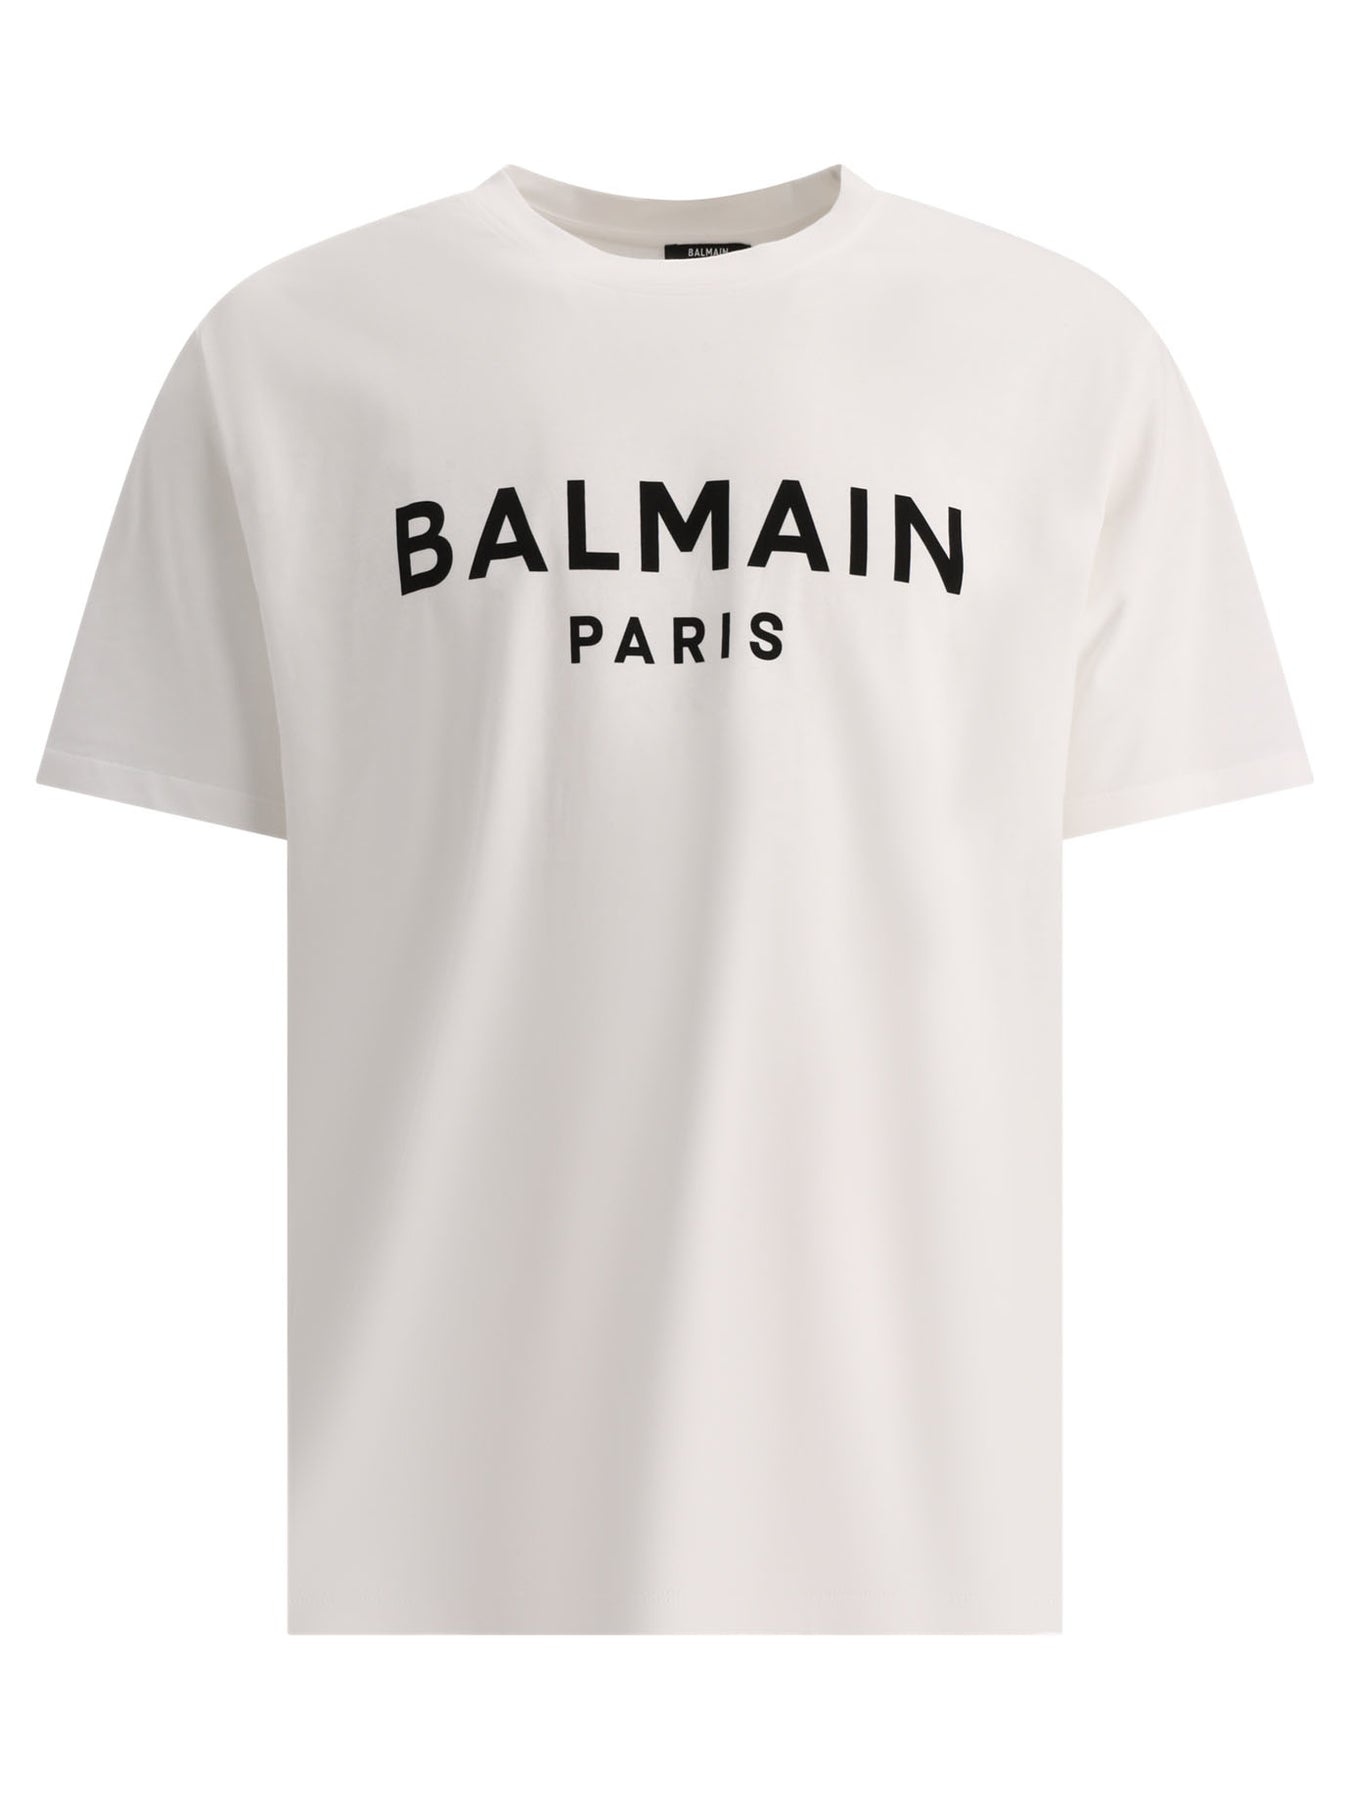 Balmain Paris T-Shirts White - 1